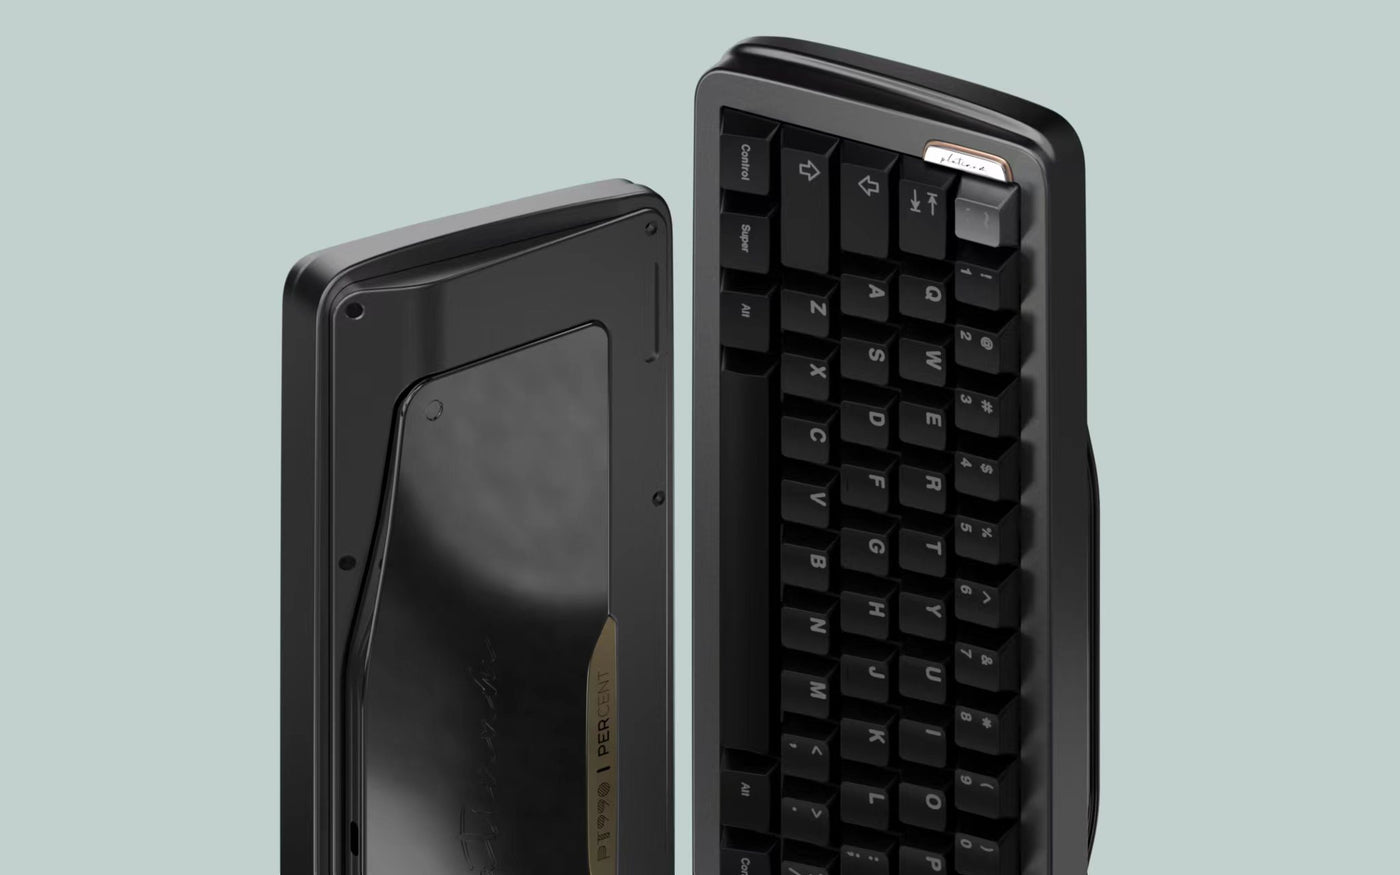 [Group Buy] PT990 Mechanical Keyboard Kit